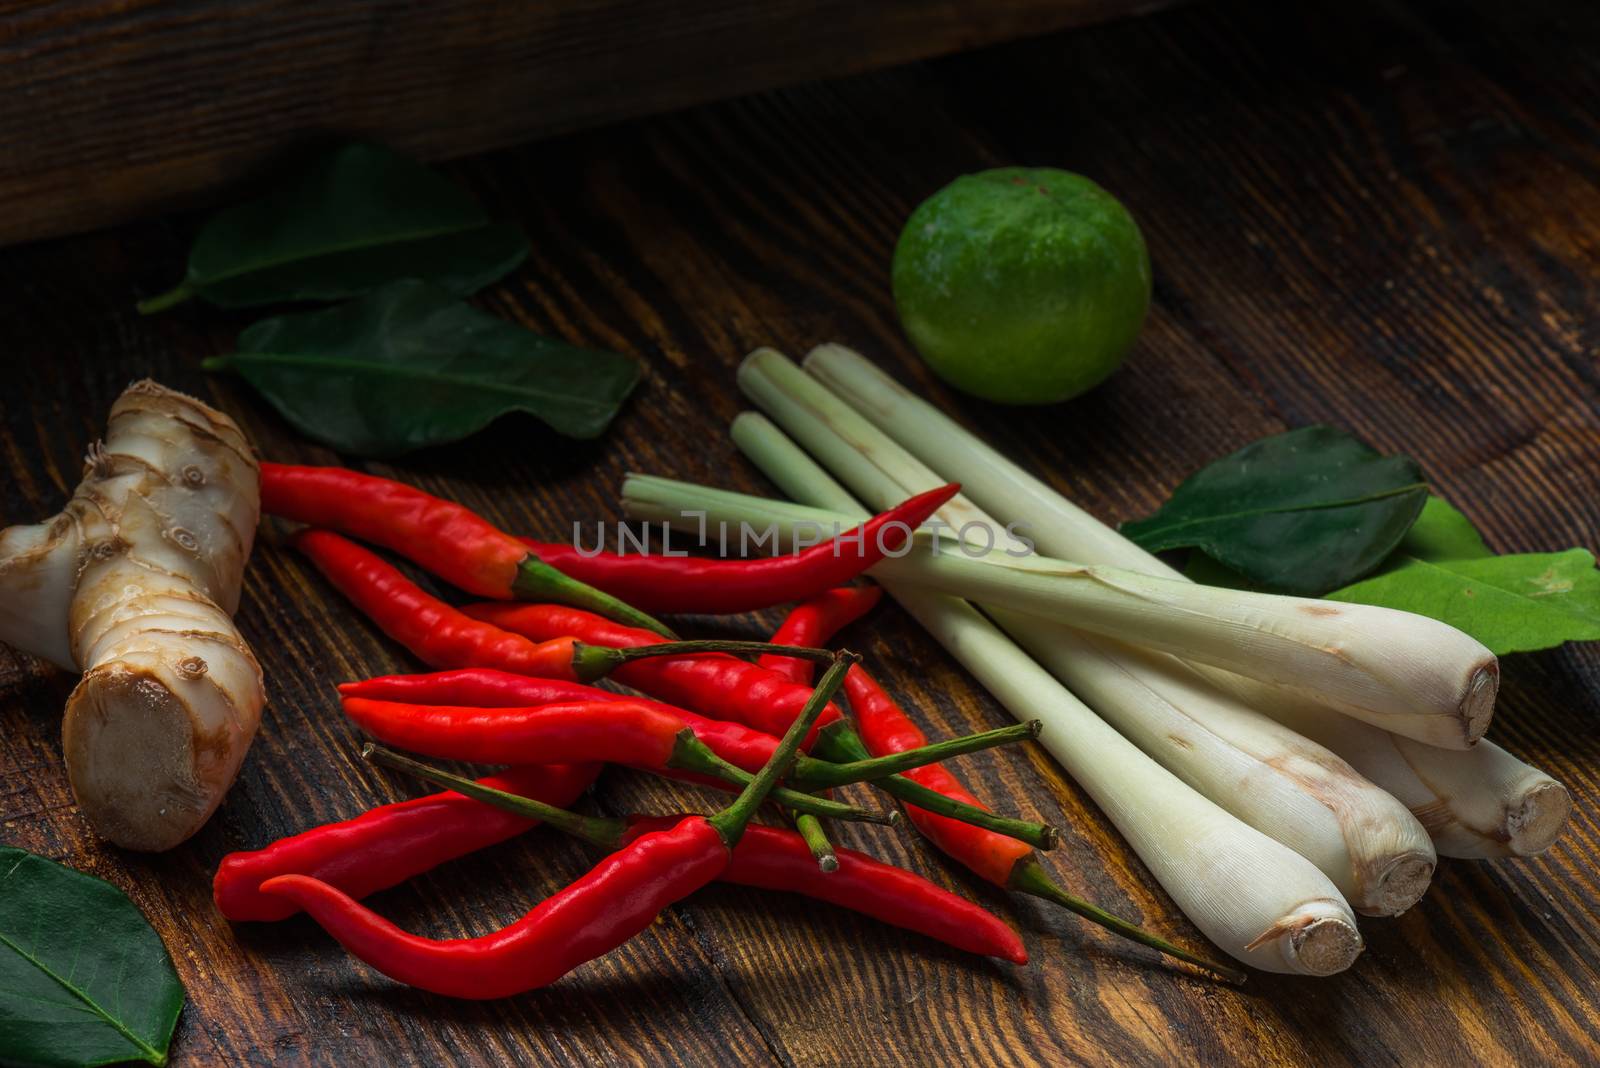 Mini chili peppers, galangal root, kaffir lime and lemongrass by Seva_blsv